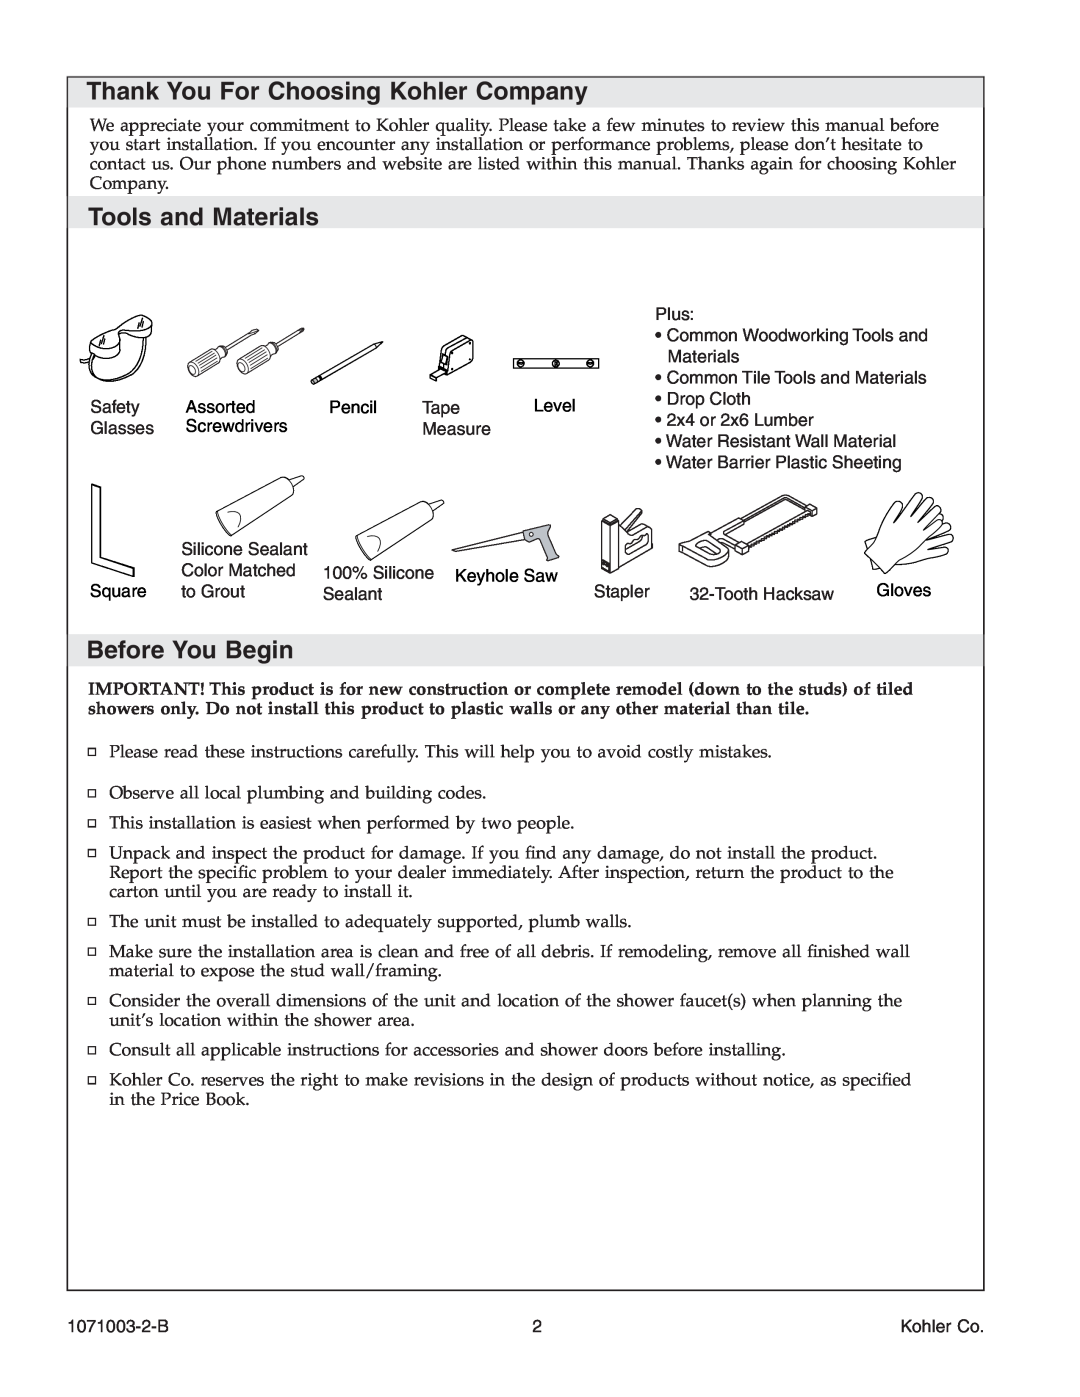 Kohler K-1840, 1071003-2-B manual Thank You For Choosing Kohler Company, Tools and Materials, Before You Begin 